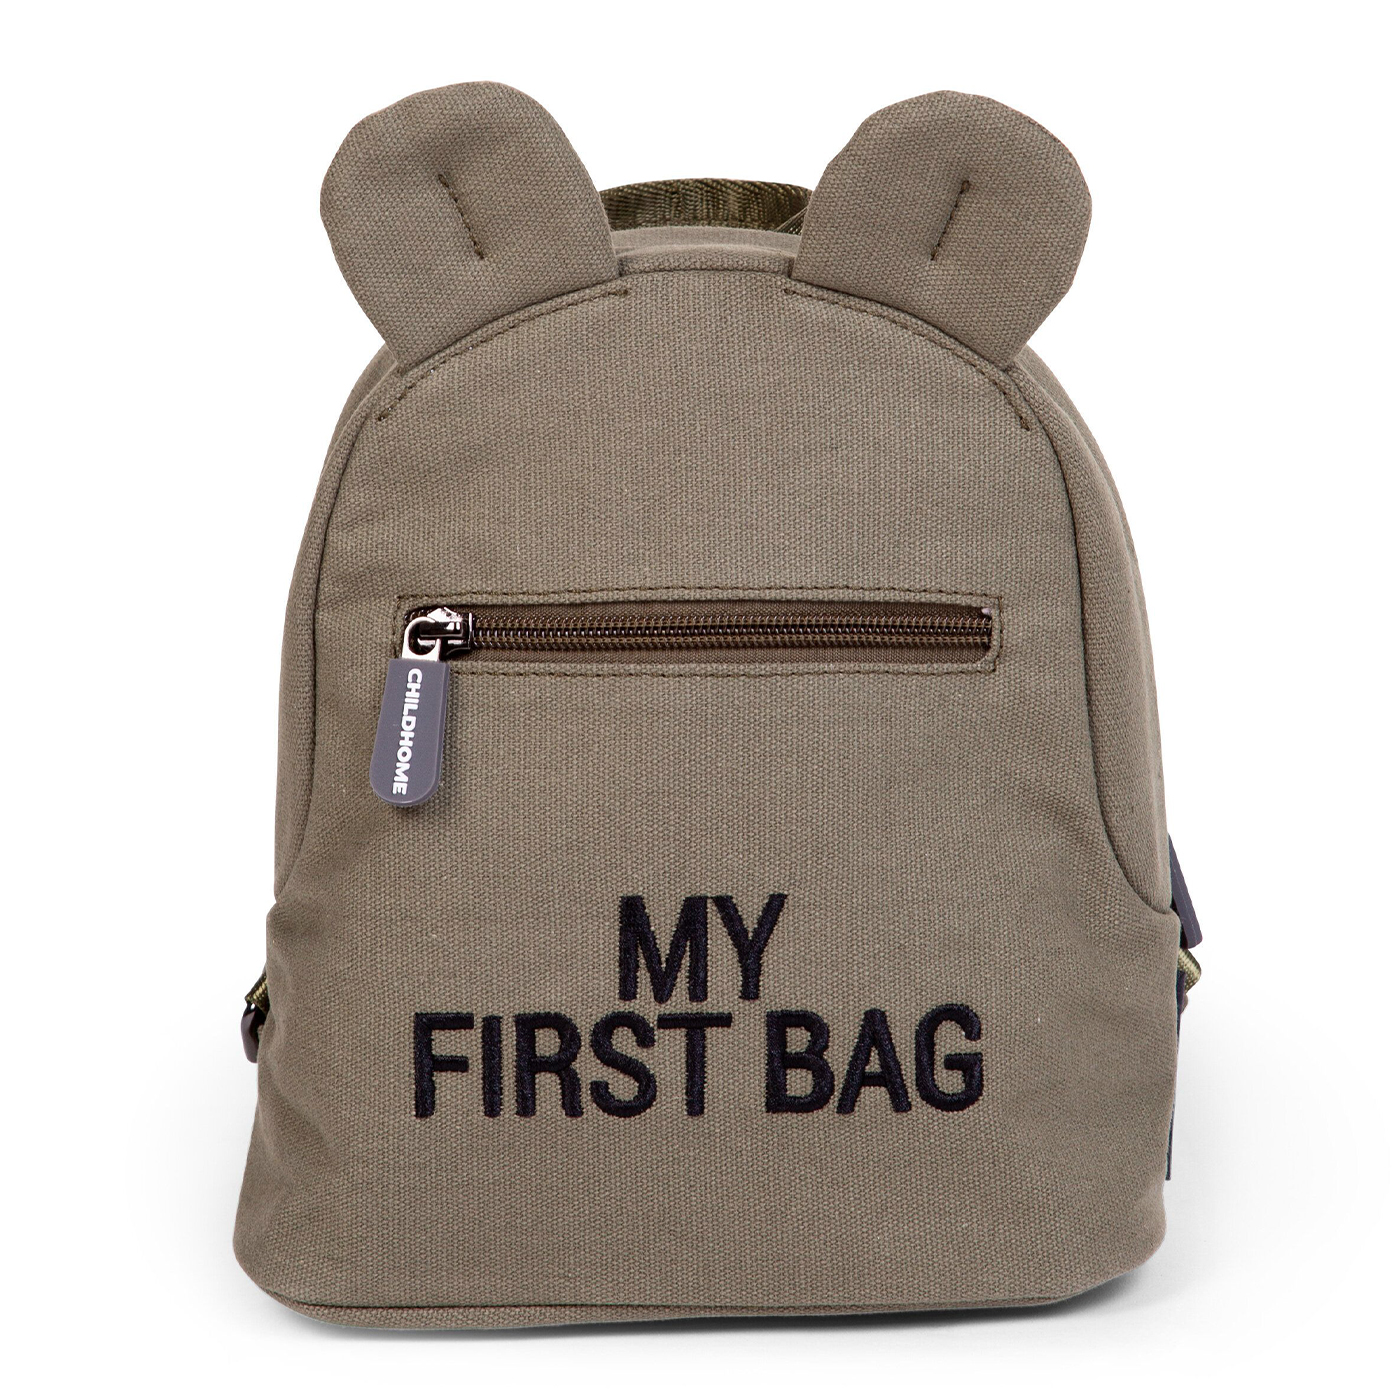  Childhome My First Bag Sırt Çantası | Haki